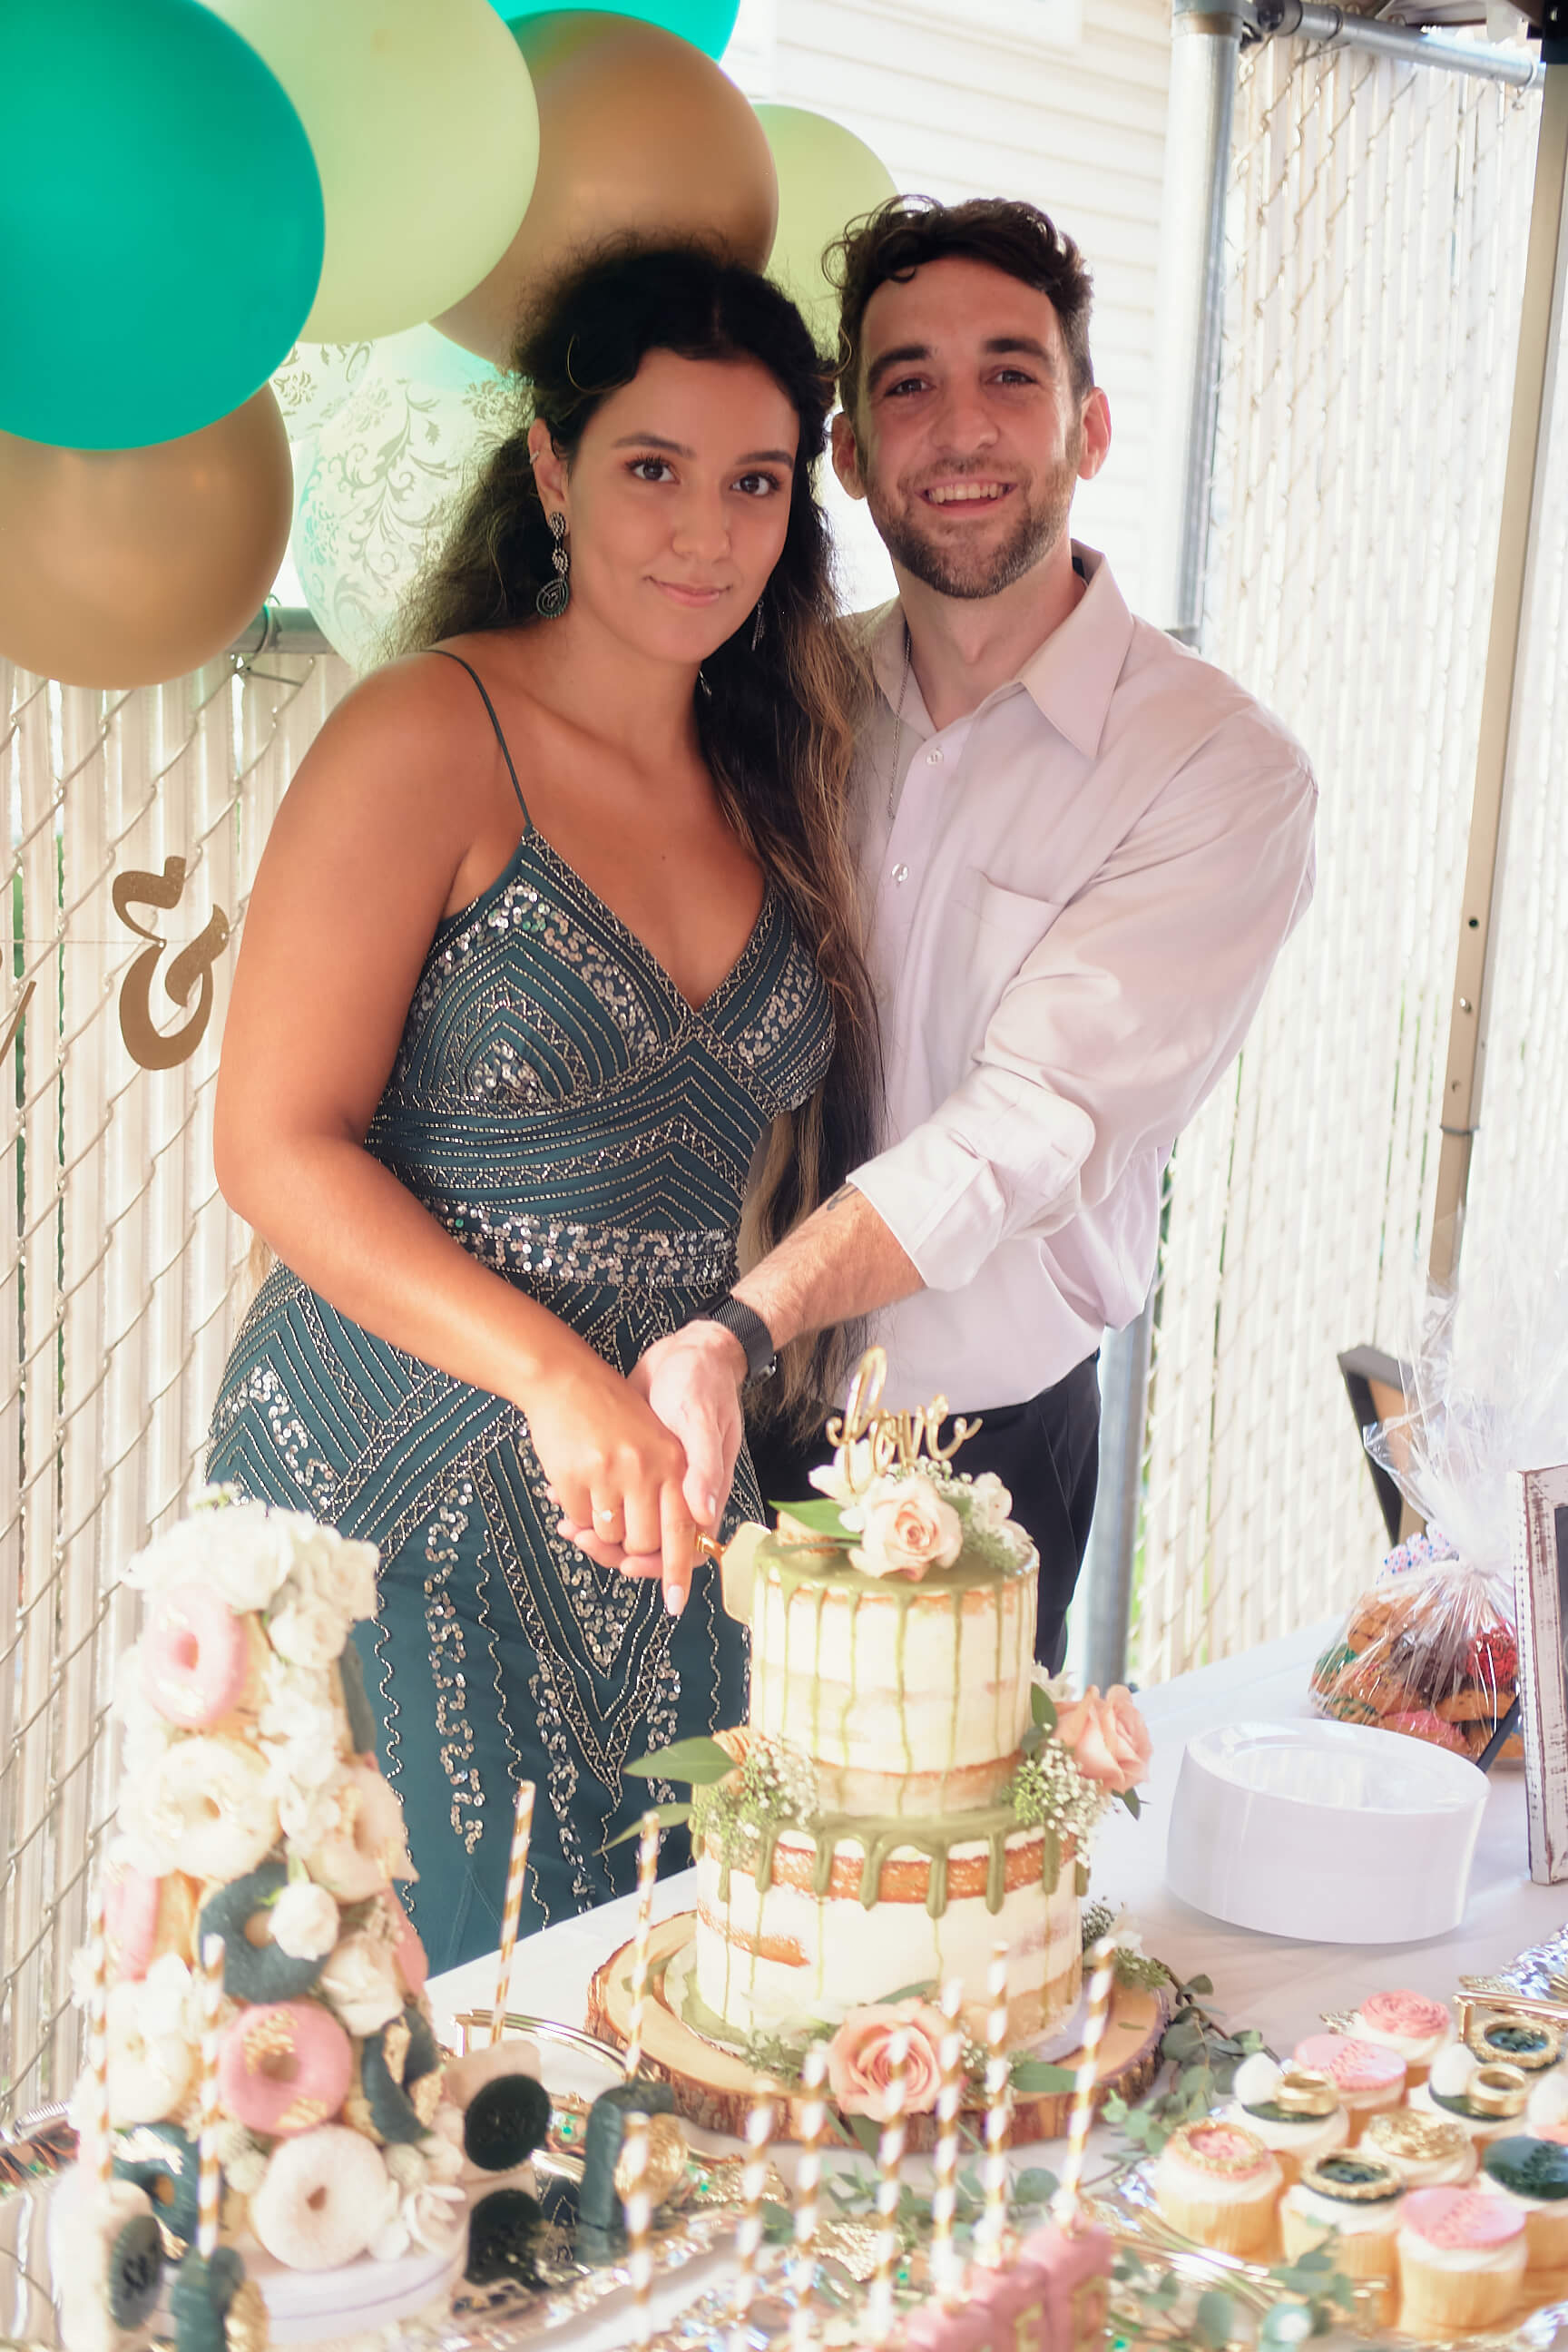 Sabrina & Joe - Engagement Party - Couples Photography - Family Photos - Staten Island, New York - Lifestyle Photography